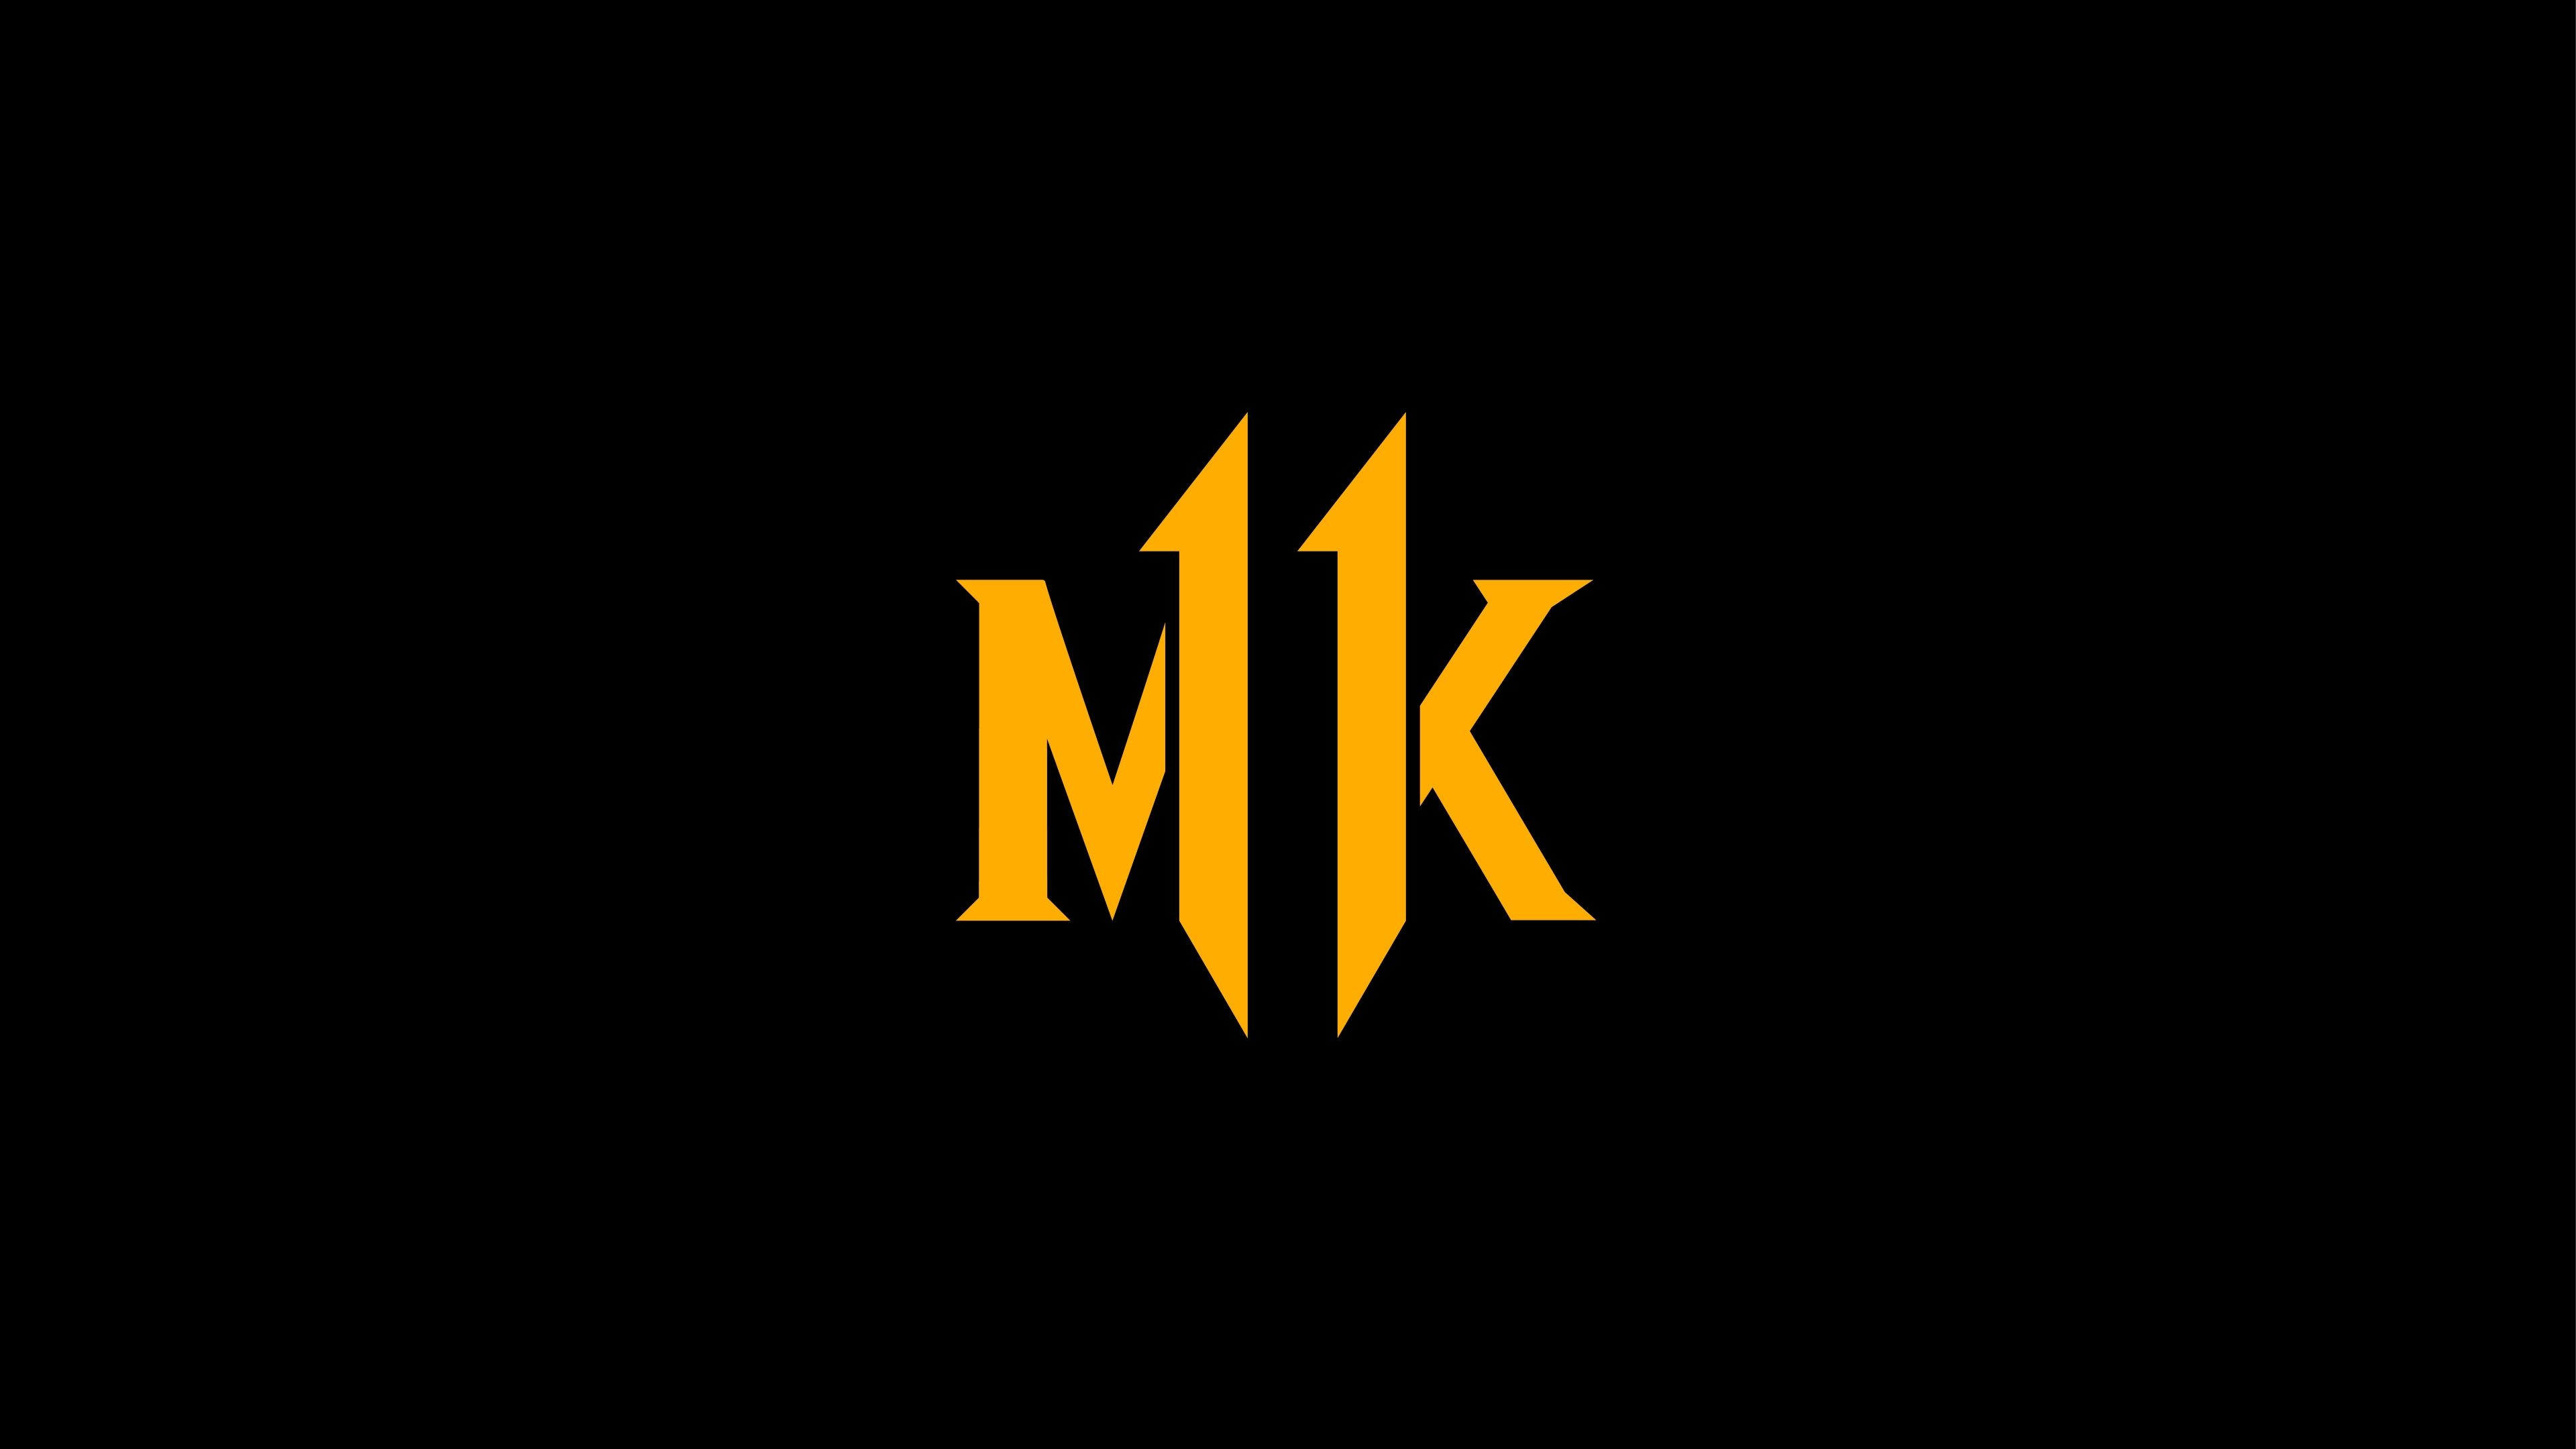 mk logo hd